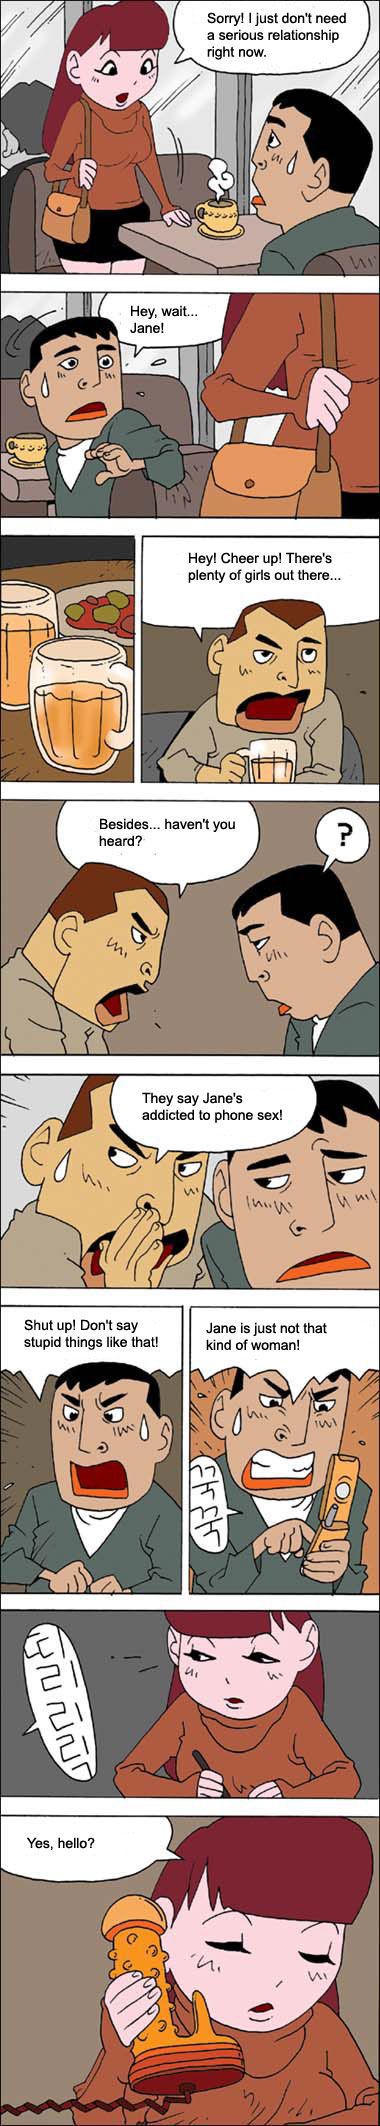 Funny Korean Comic Strips (41 pics)